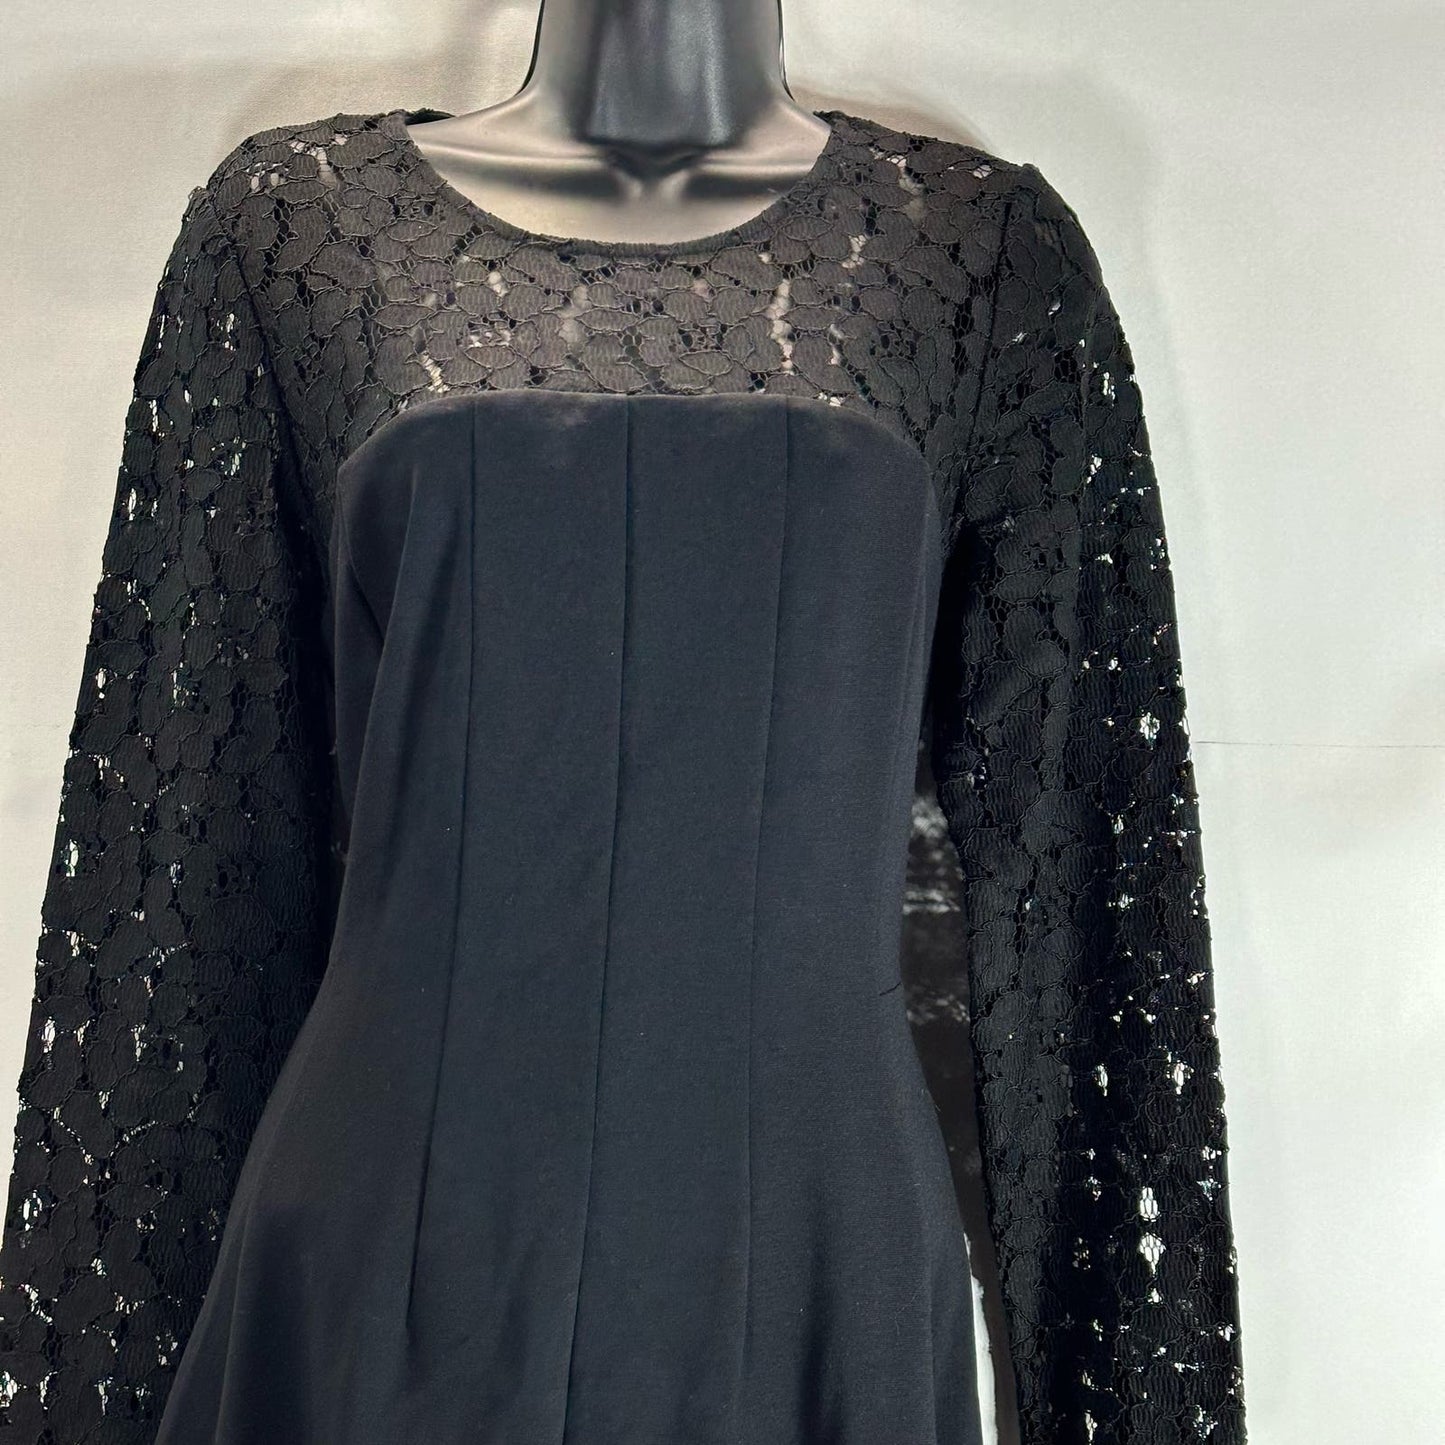 BODEN Women's Black Selena Long Lace Sleeve Fit & Flare Knee-Length Dress SZ 8L